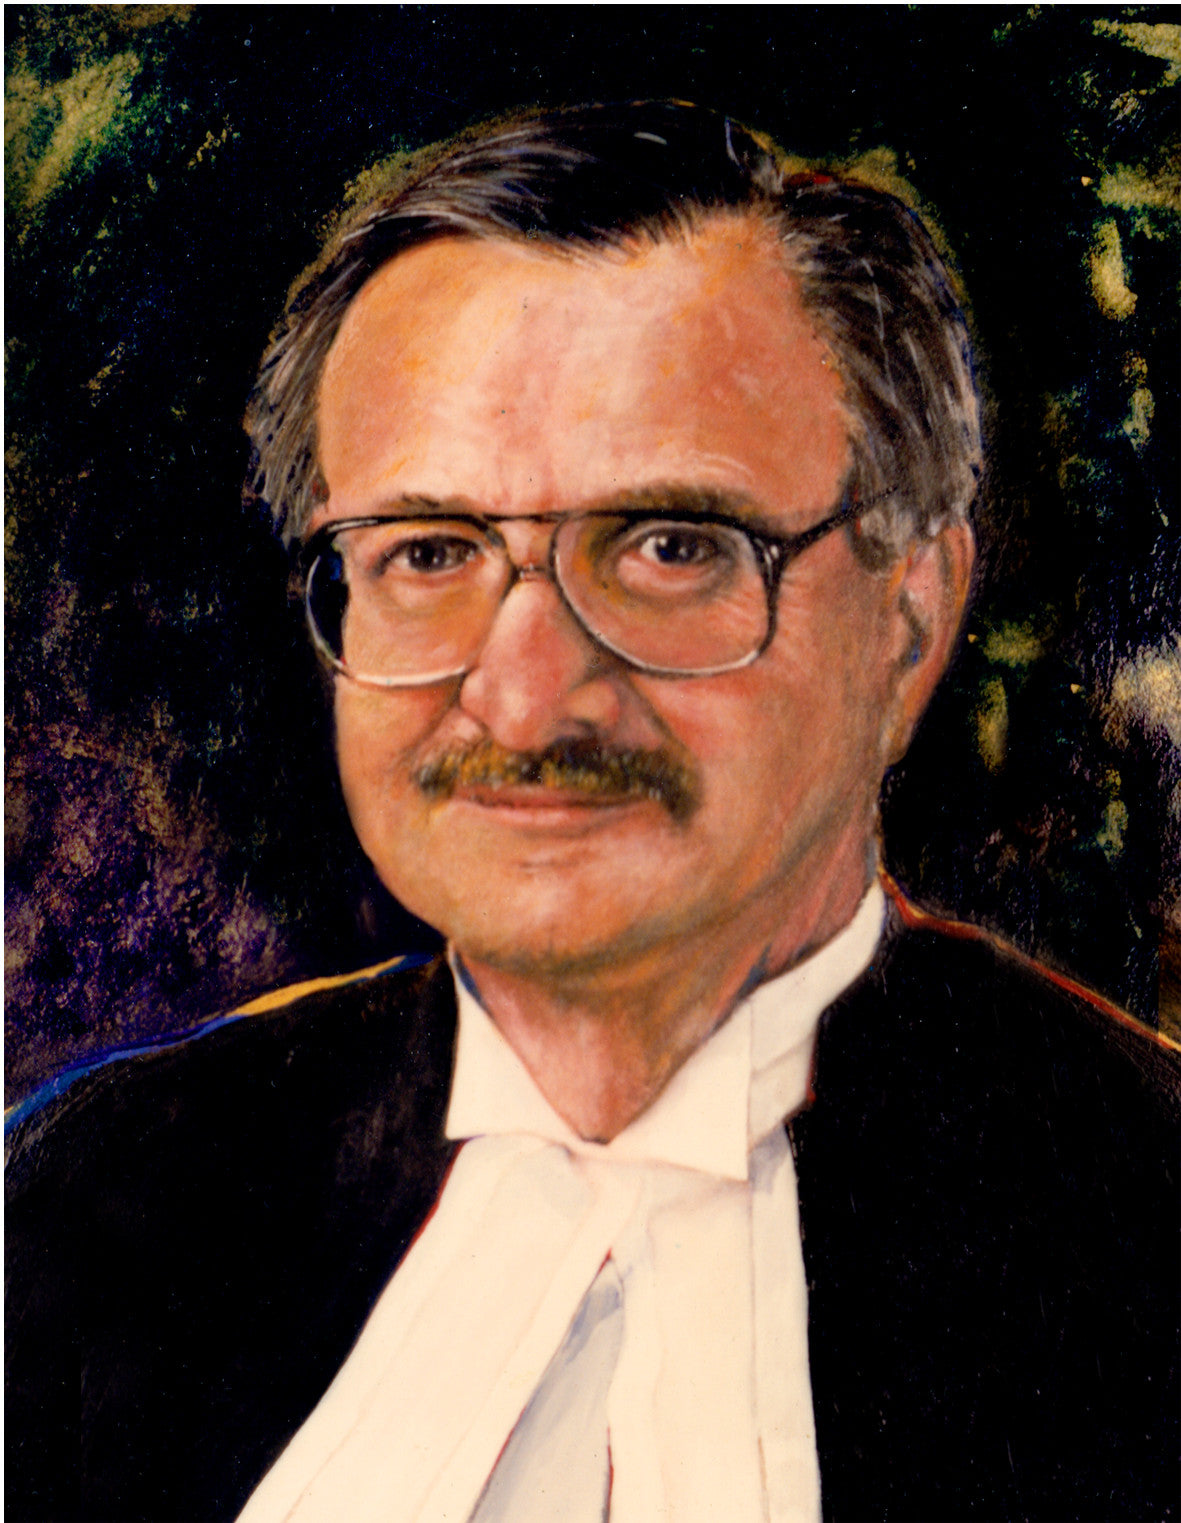 Justice John Sopinka portrait by Trevor Goring